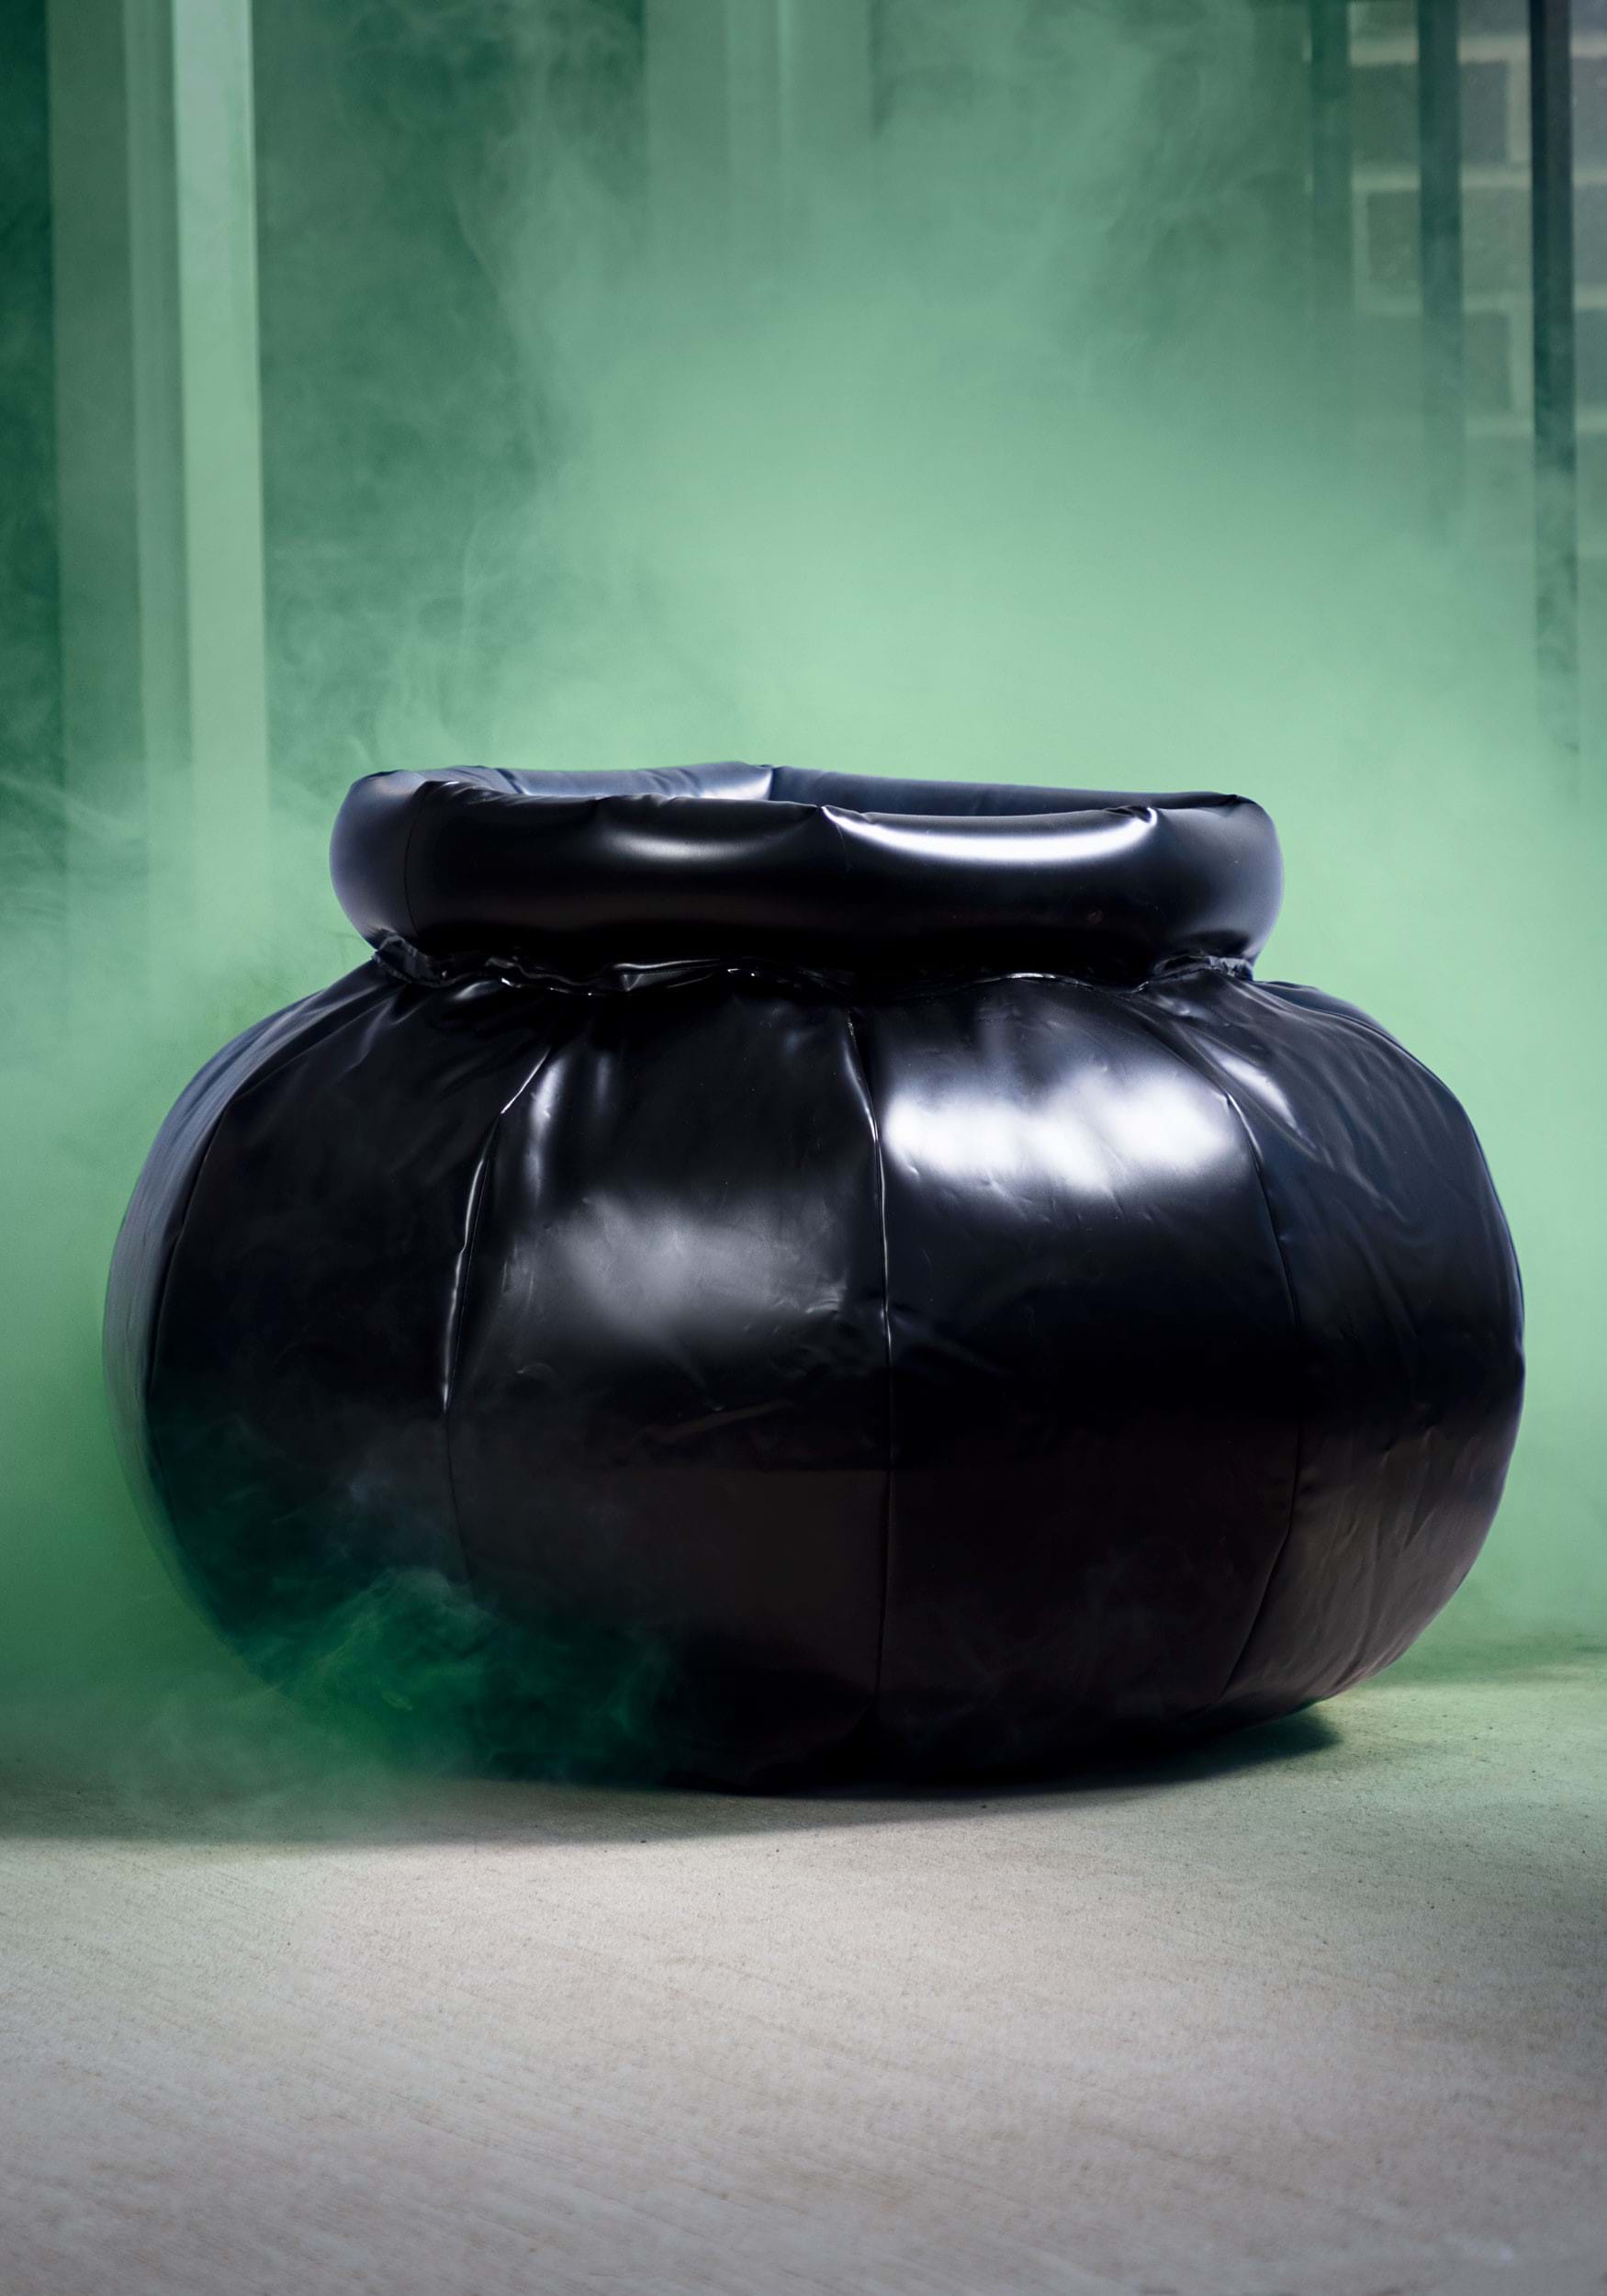 2FT Witch's Cauldron Inflatable Decoration